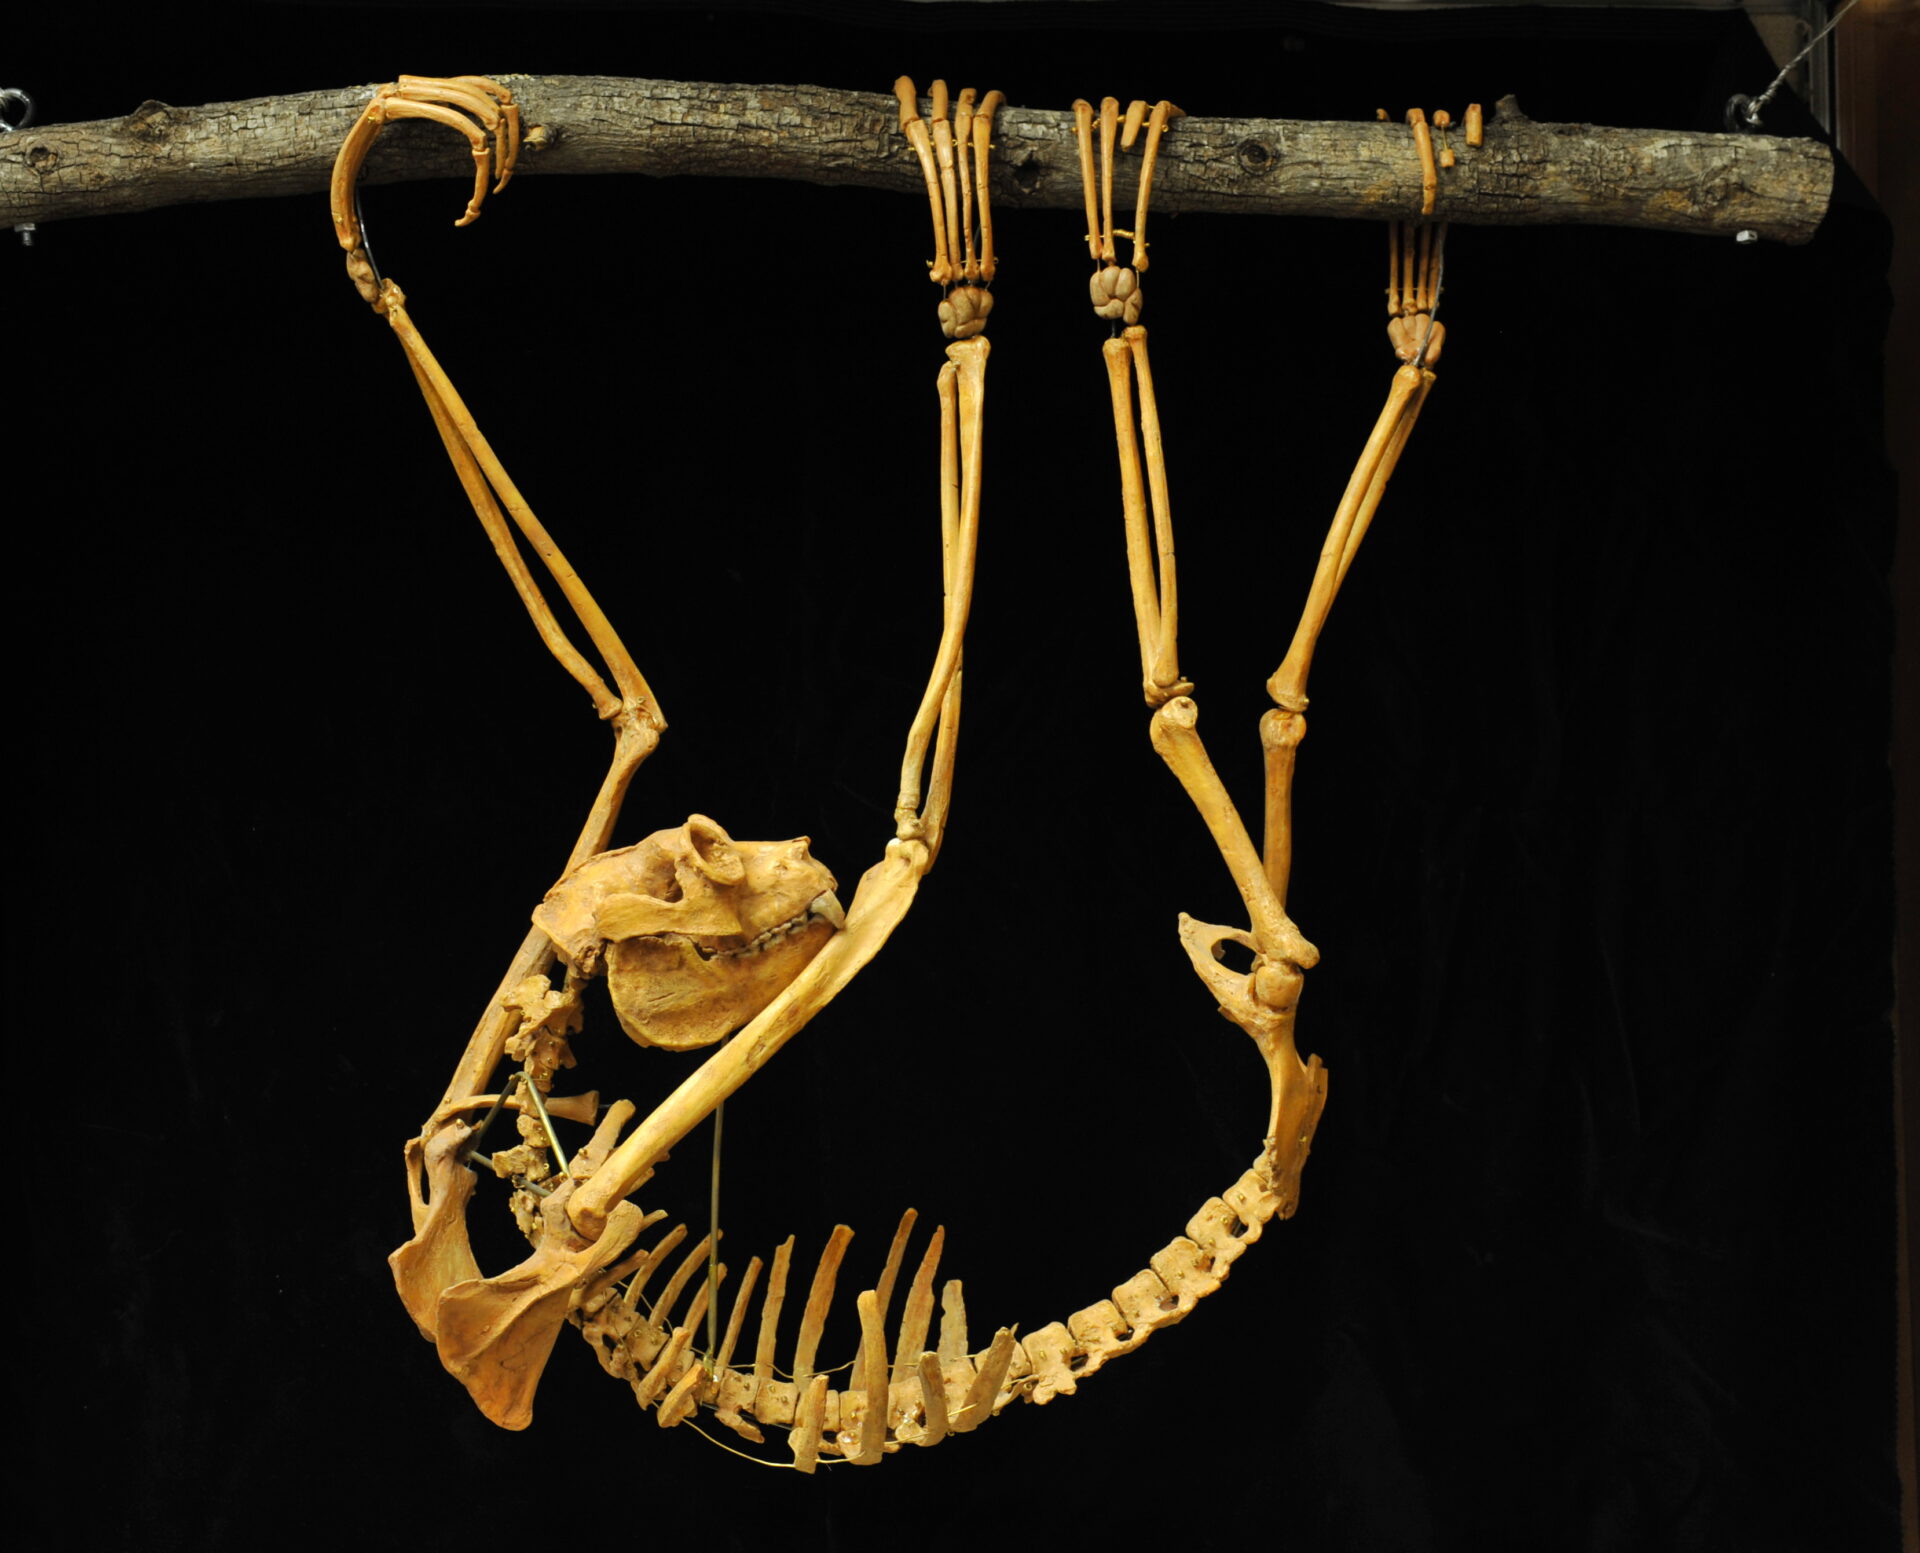 Complete subfossil skeleton of Palaeopropithecus